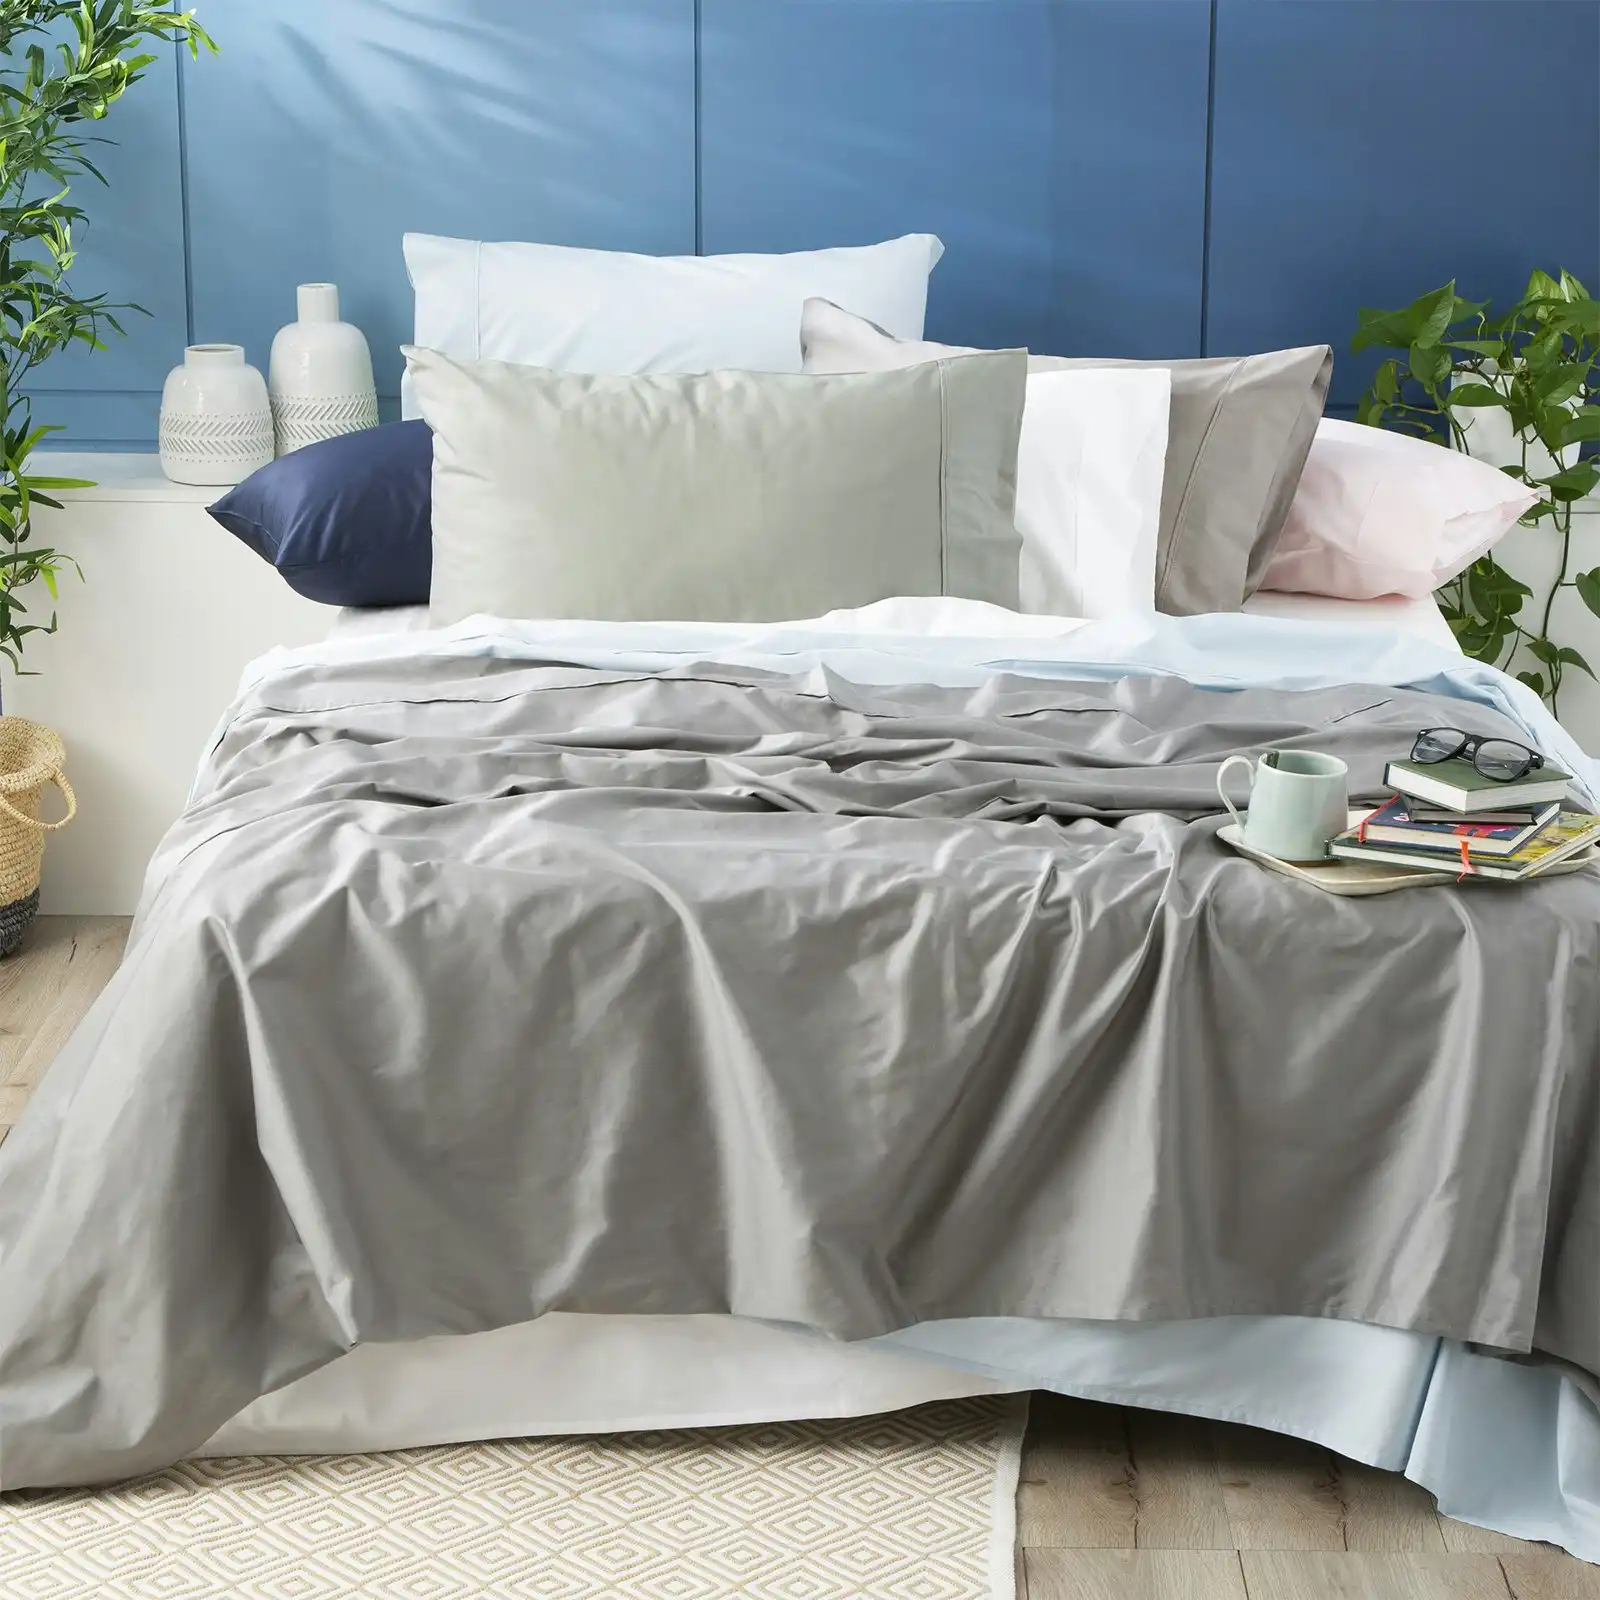 Park Avenue Double Sheet/Pillowcases Set 500TC Bamboo Cotton Bedding Charcoal